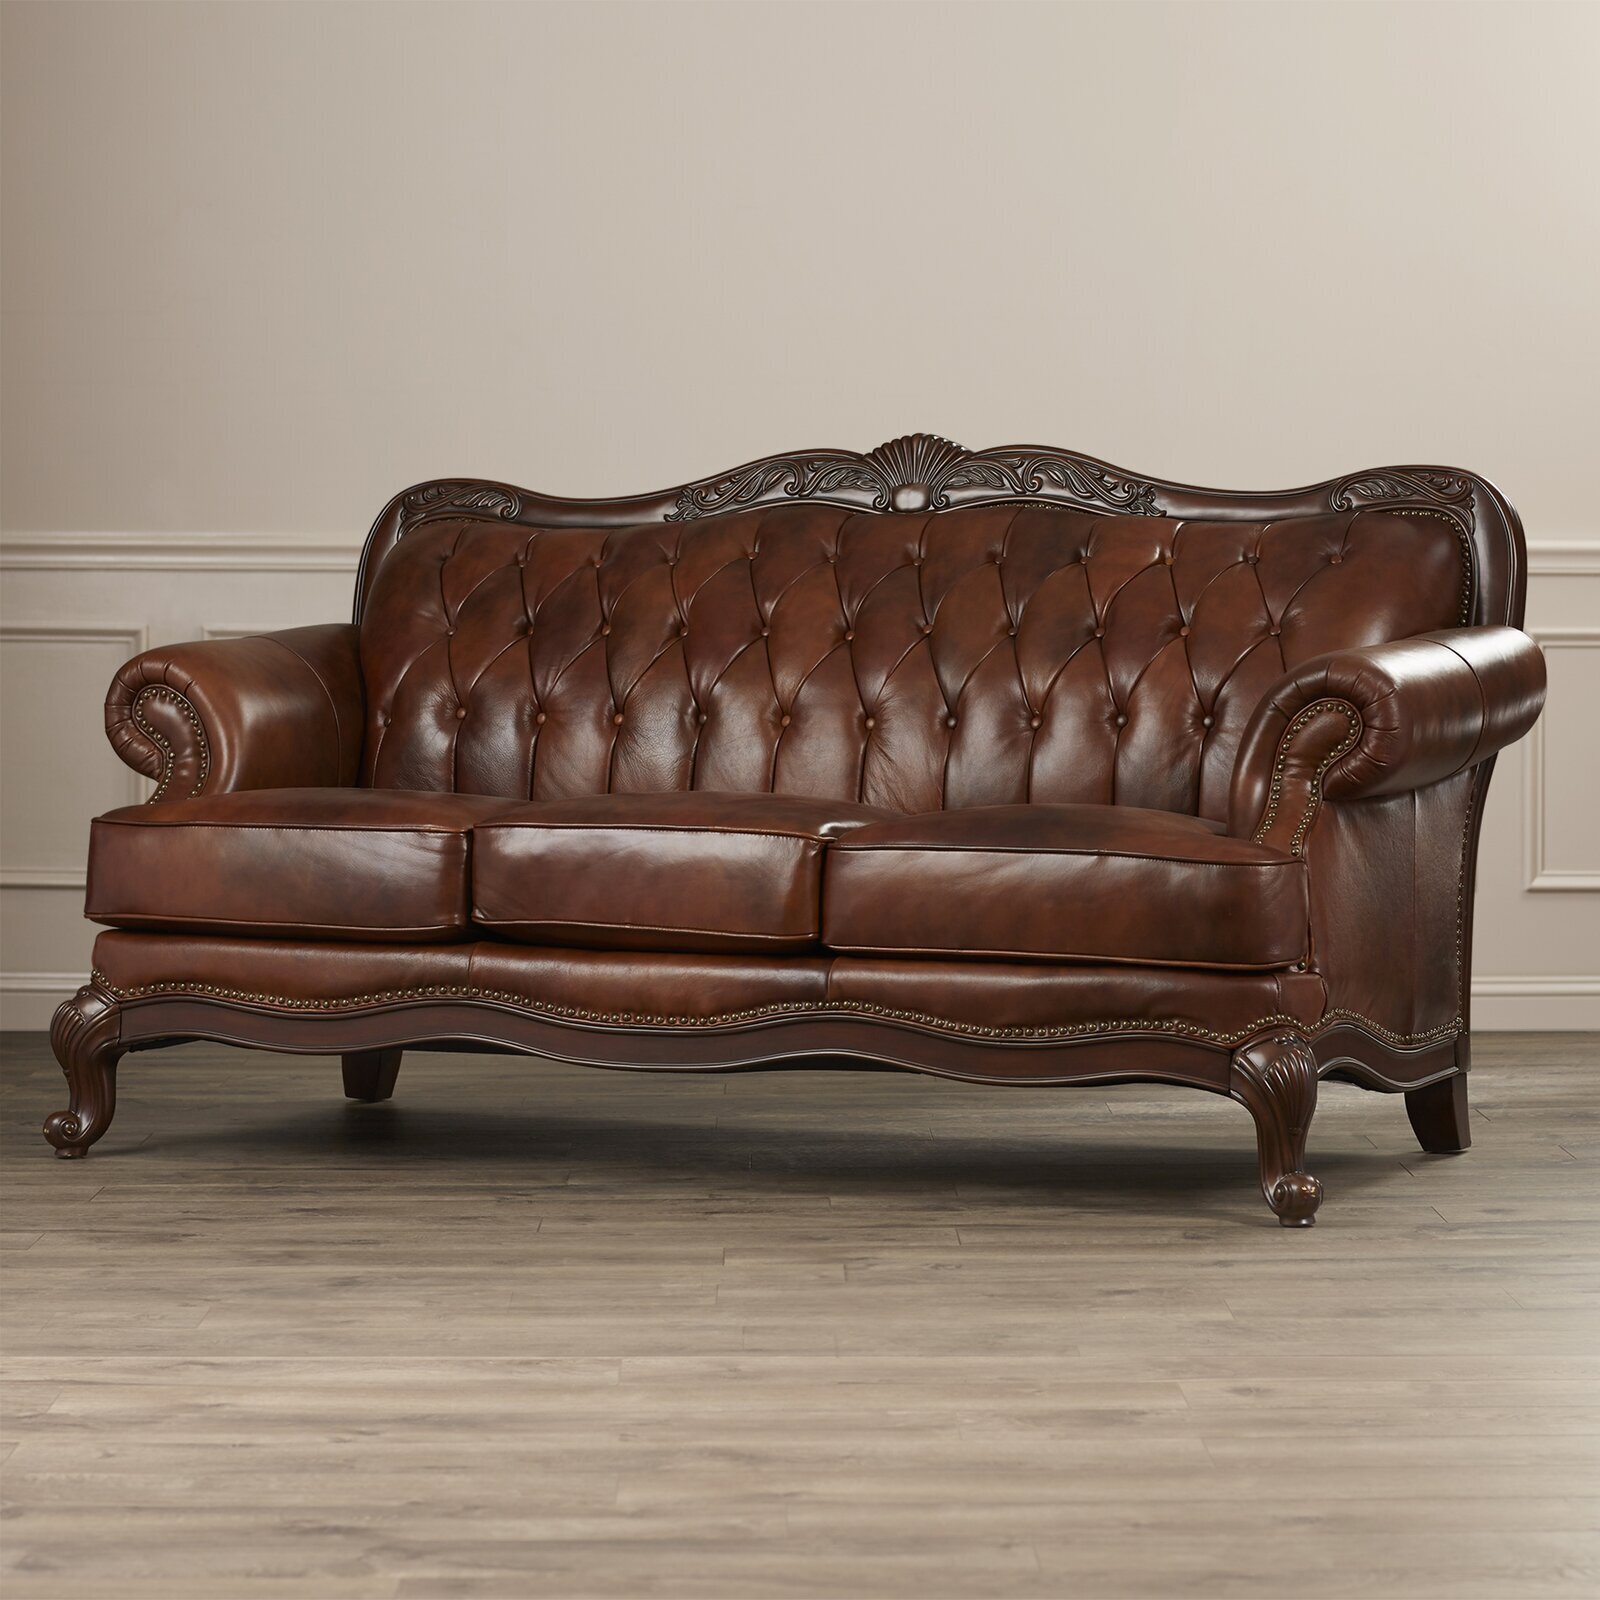 Curvy shaped Leather Sofa With Nailhead Trim